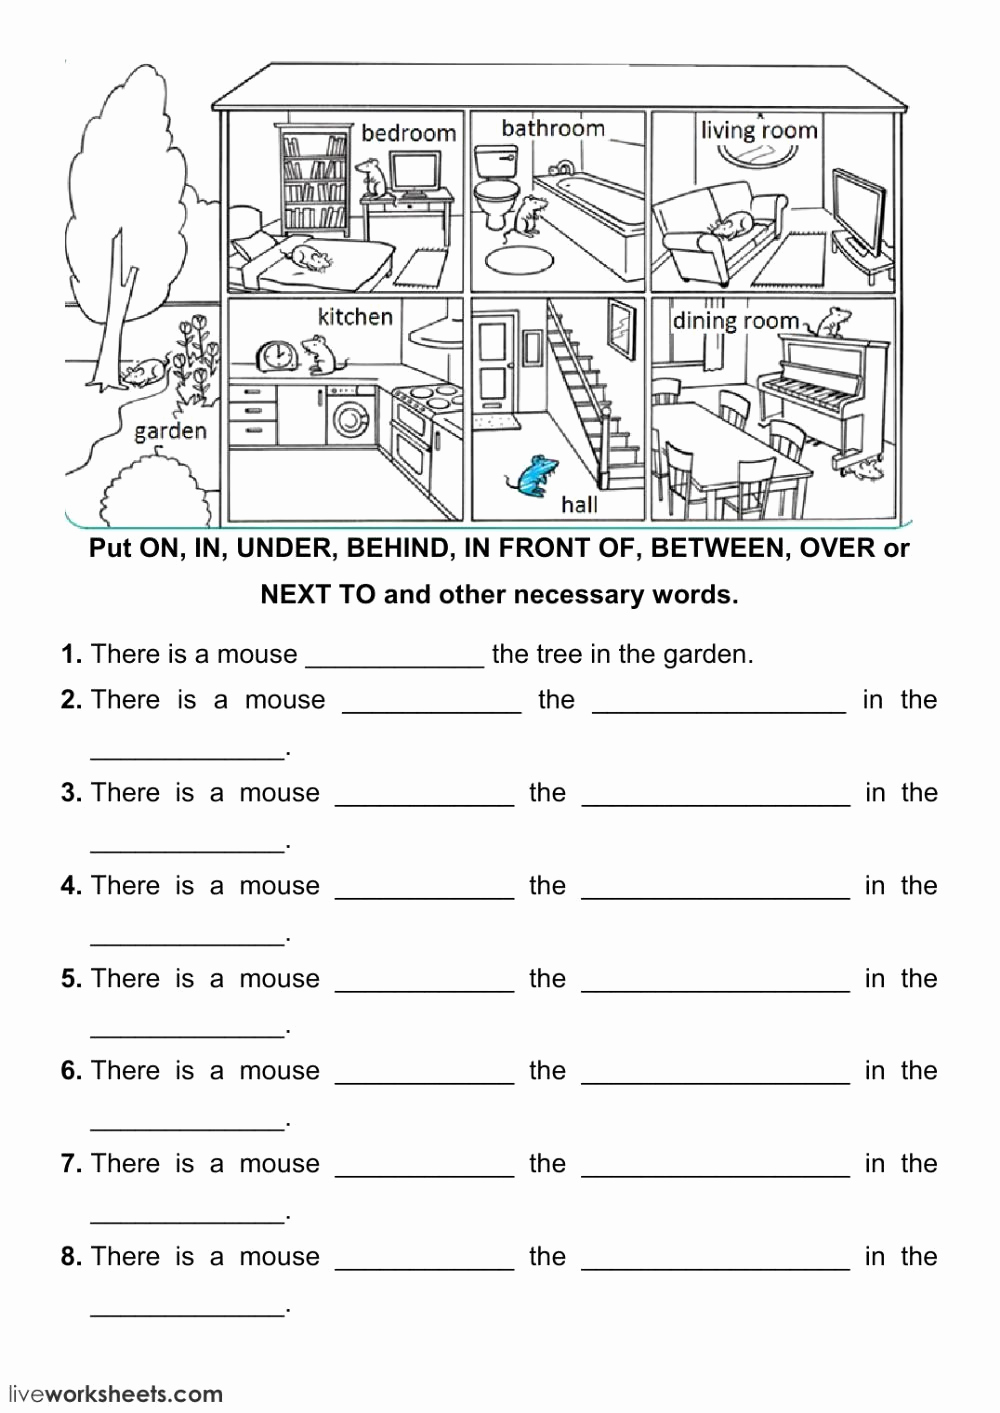 Prepositions Worksheets Middle School Luxury 20 Preposition Worksheets for Middle School Printable